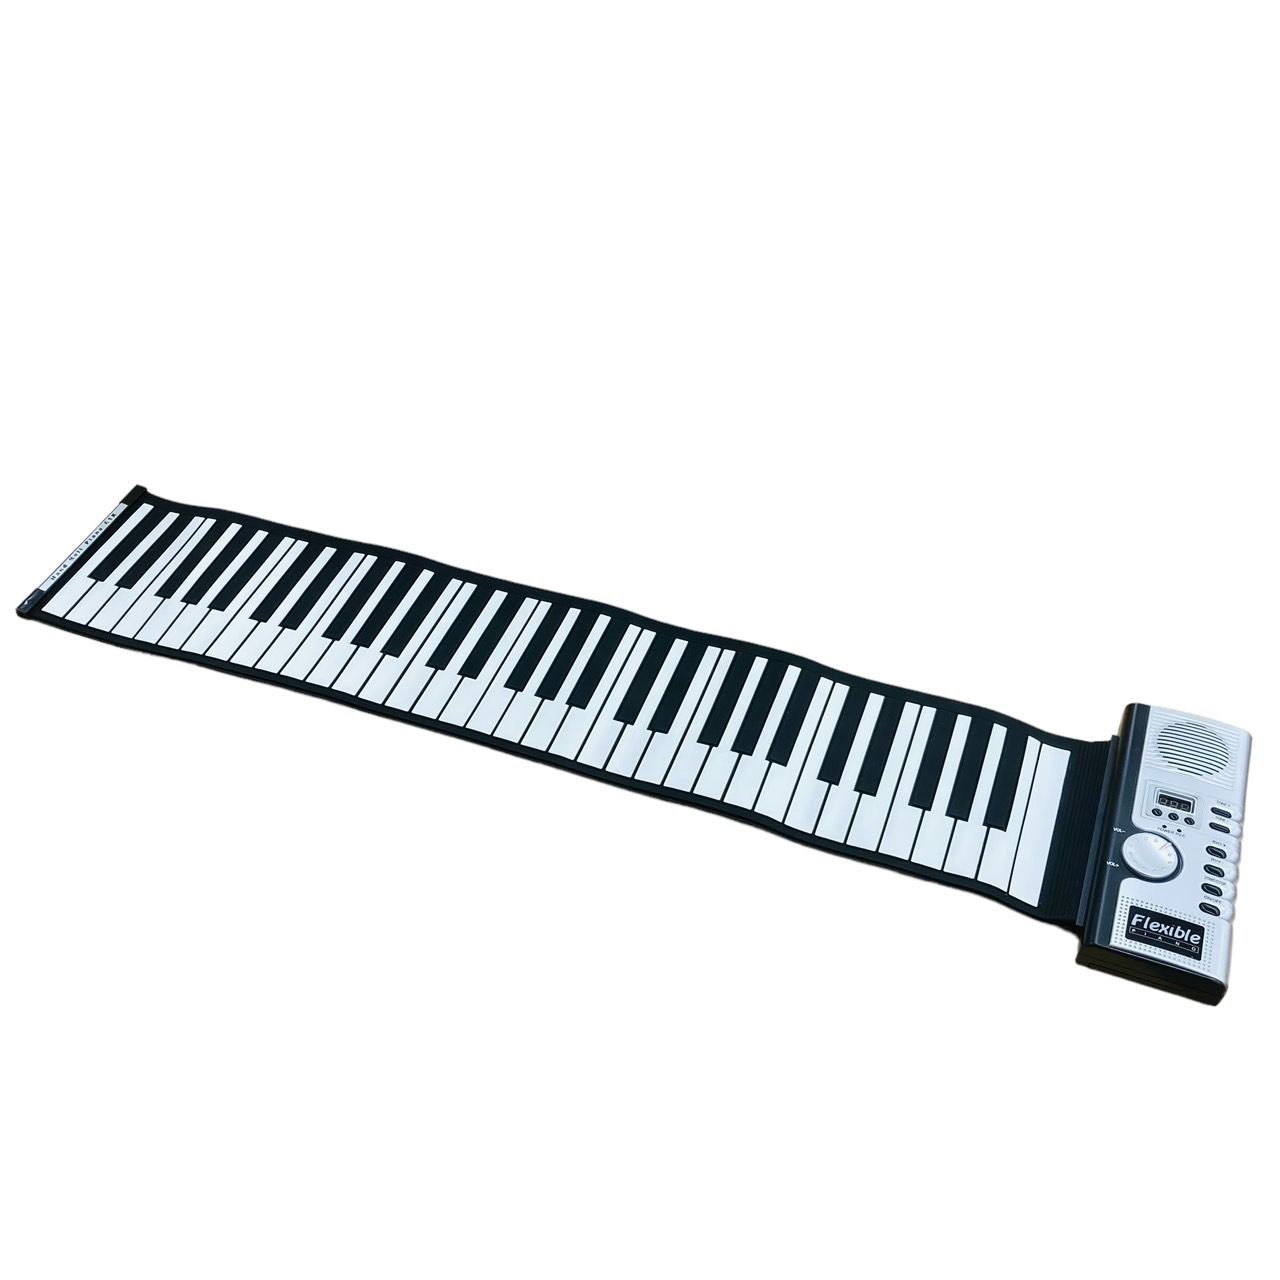 flexible PIANO ロールアップピアノ Soft keyboard ソフトキーボード